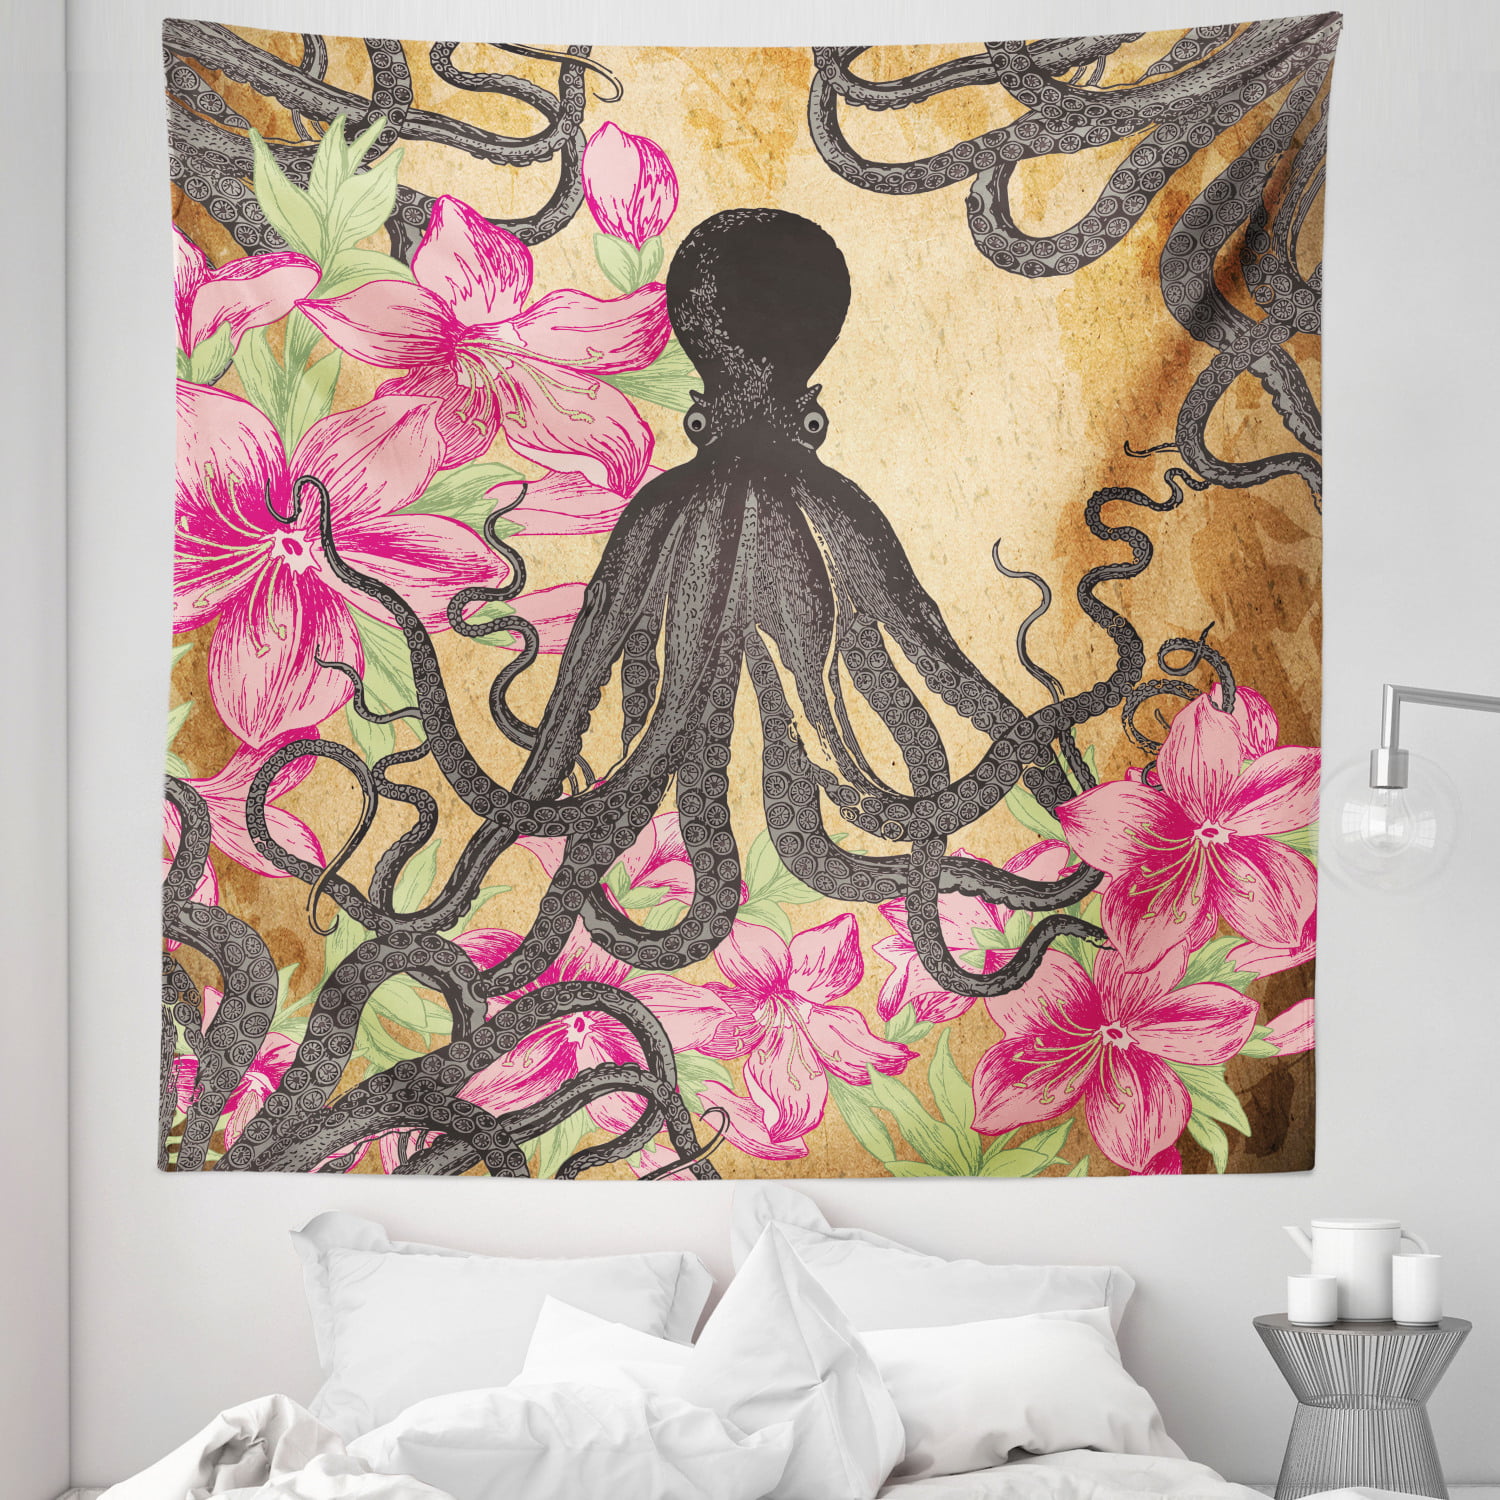 Ocean Octopus Tapestry Wall Hanging for Bedroom Living Room Dorm Wall Blankets 